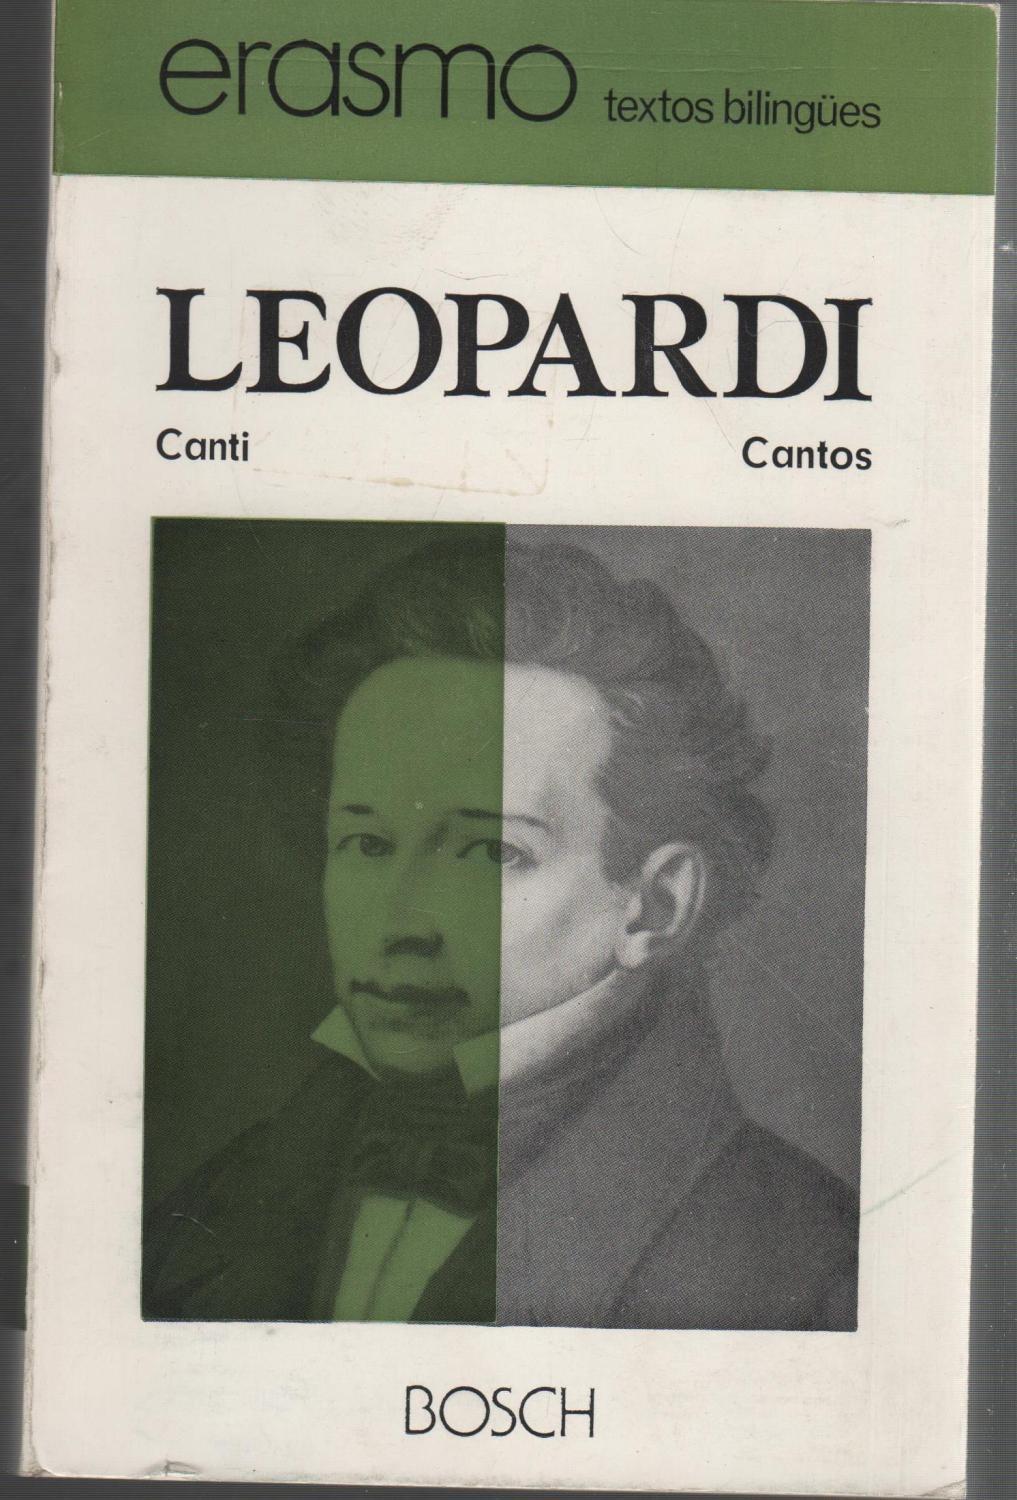 Cantos (Giacomo Leopardi) (textos bilingues)